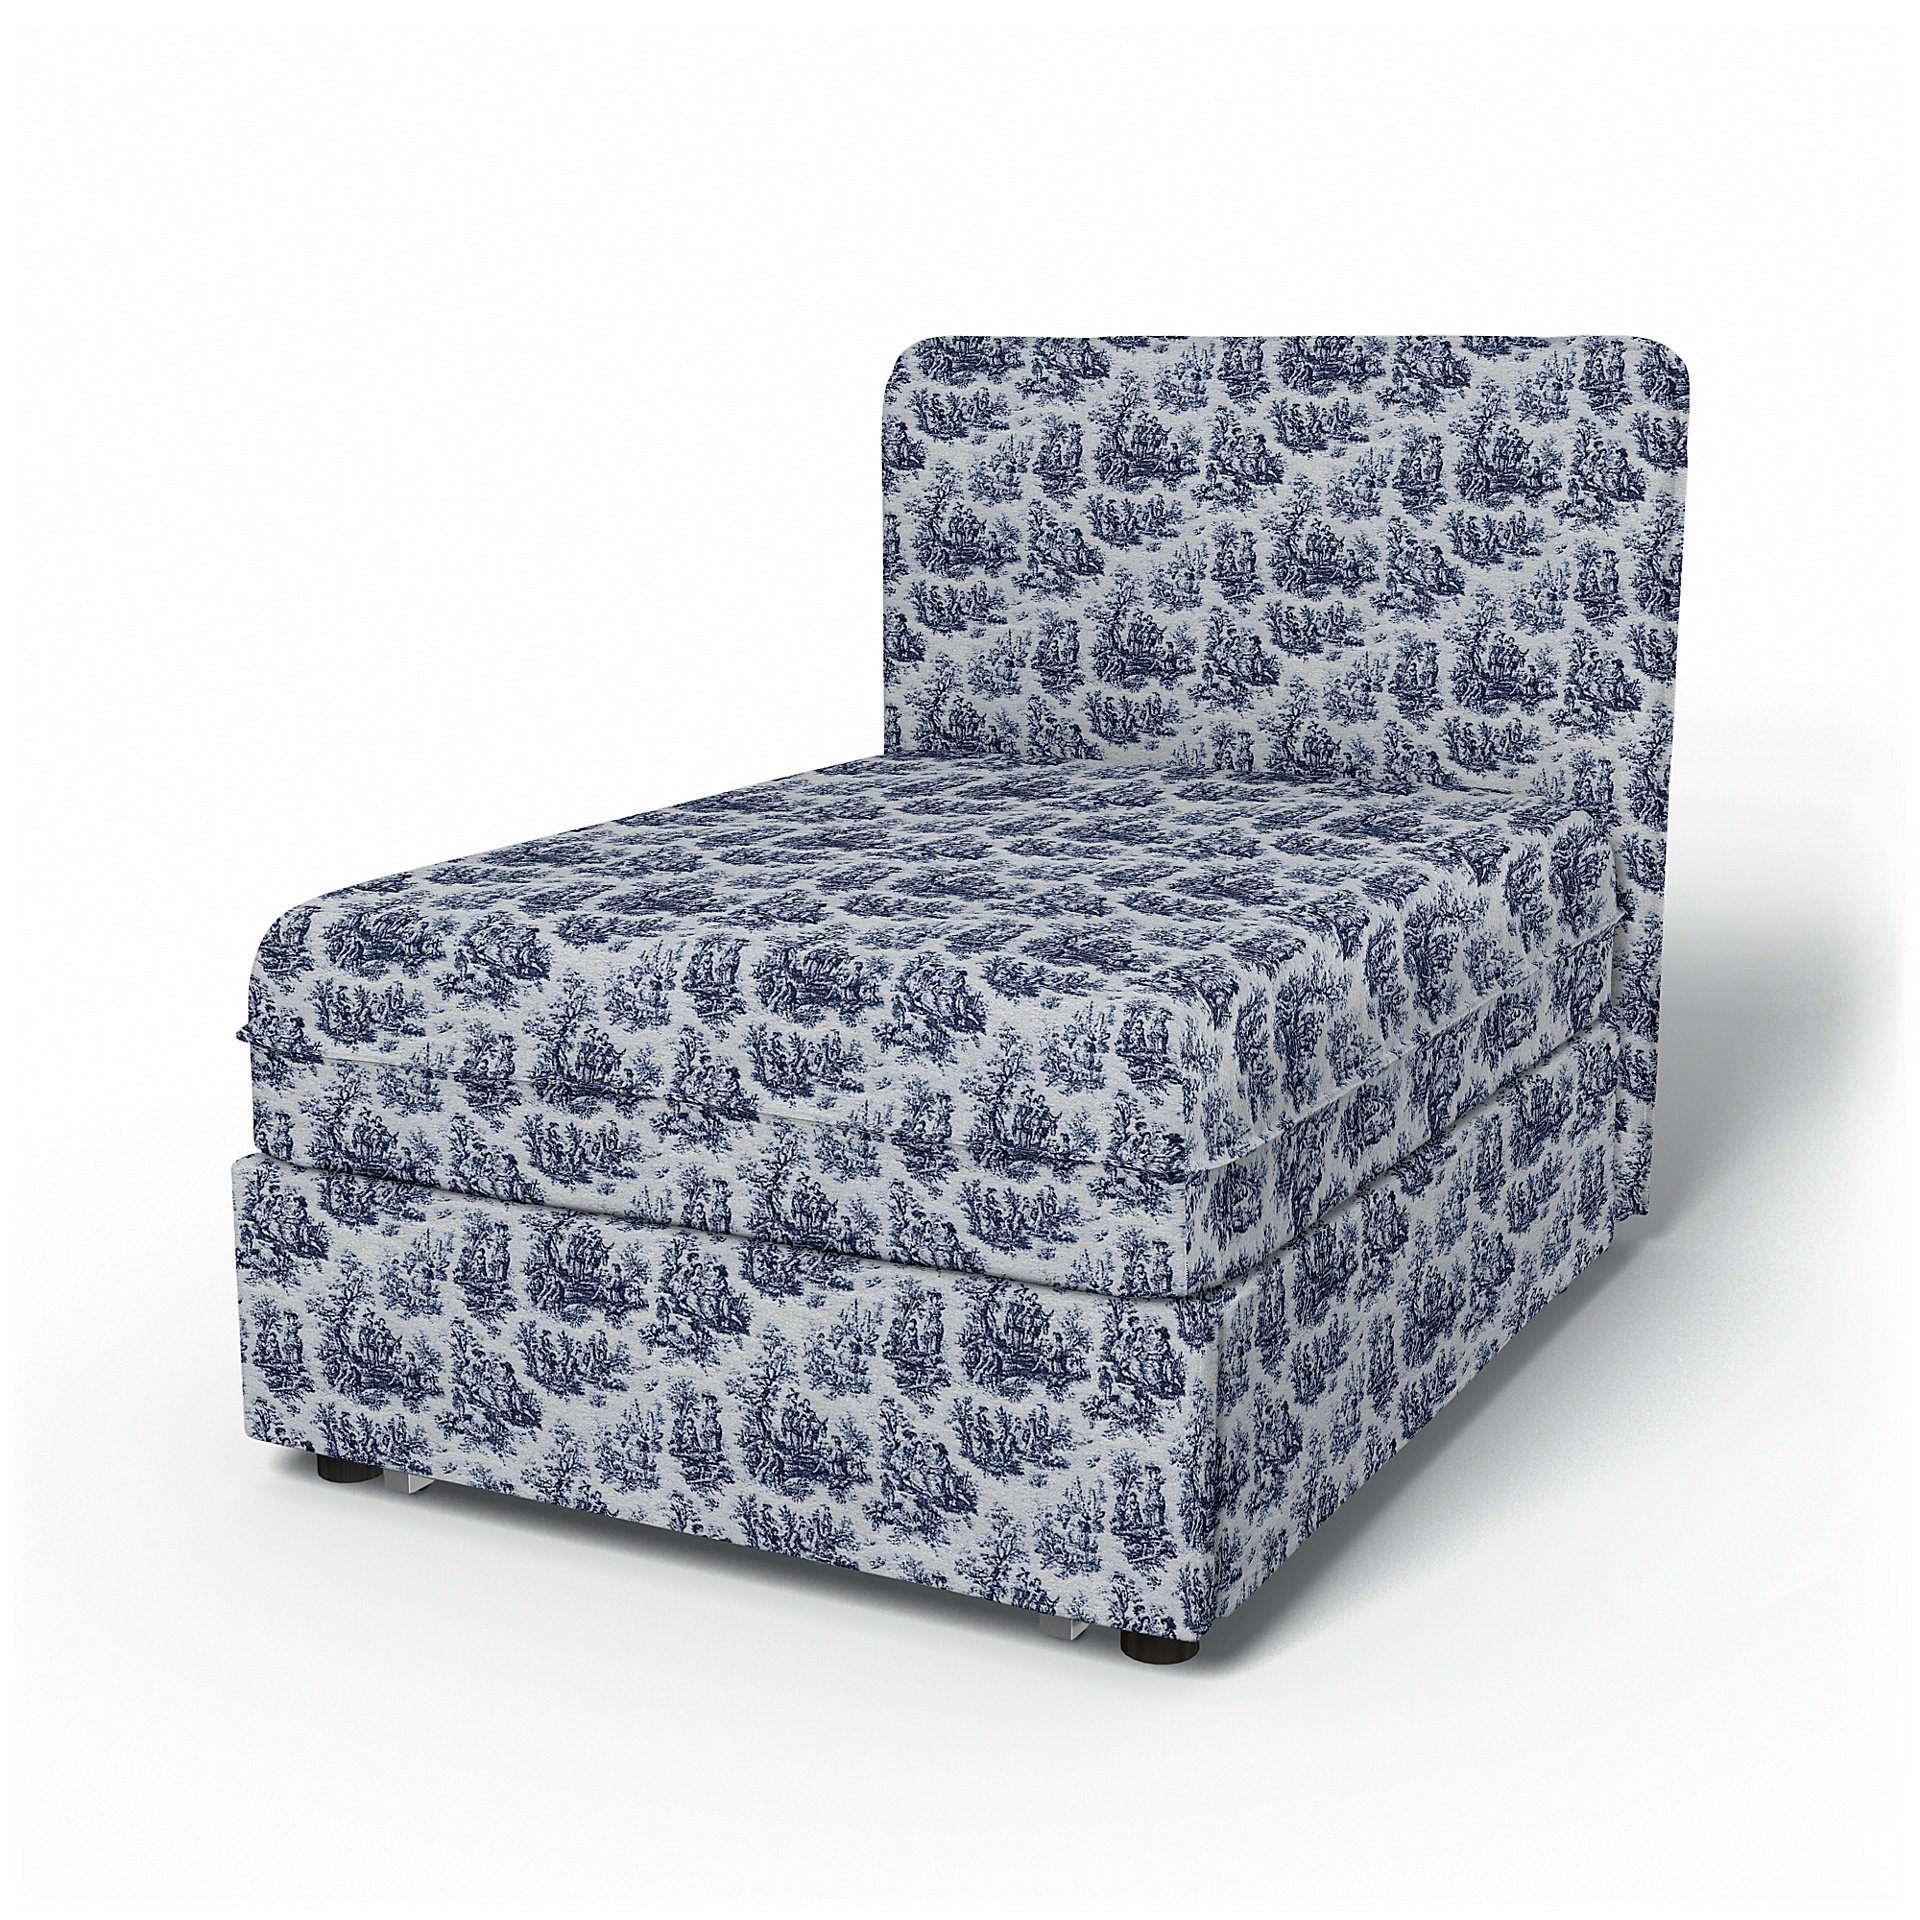 IKEA - Vallentuna Seat Module with Low Back Sofa Bed Cover 80x100 cm 32x39in, Dark Blue, Boucle & Te